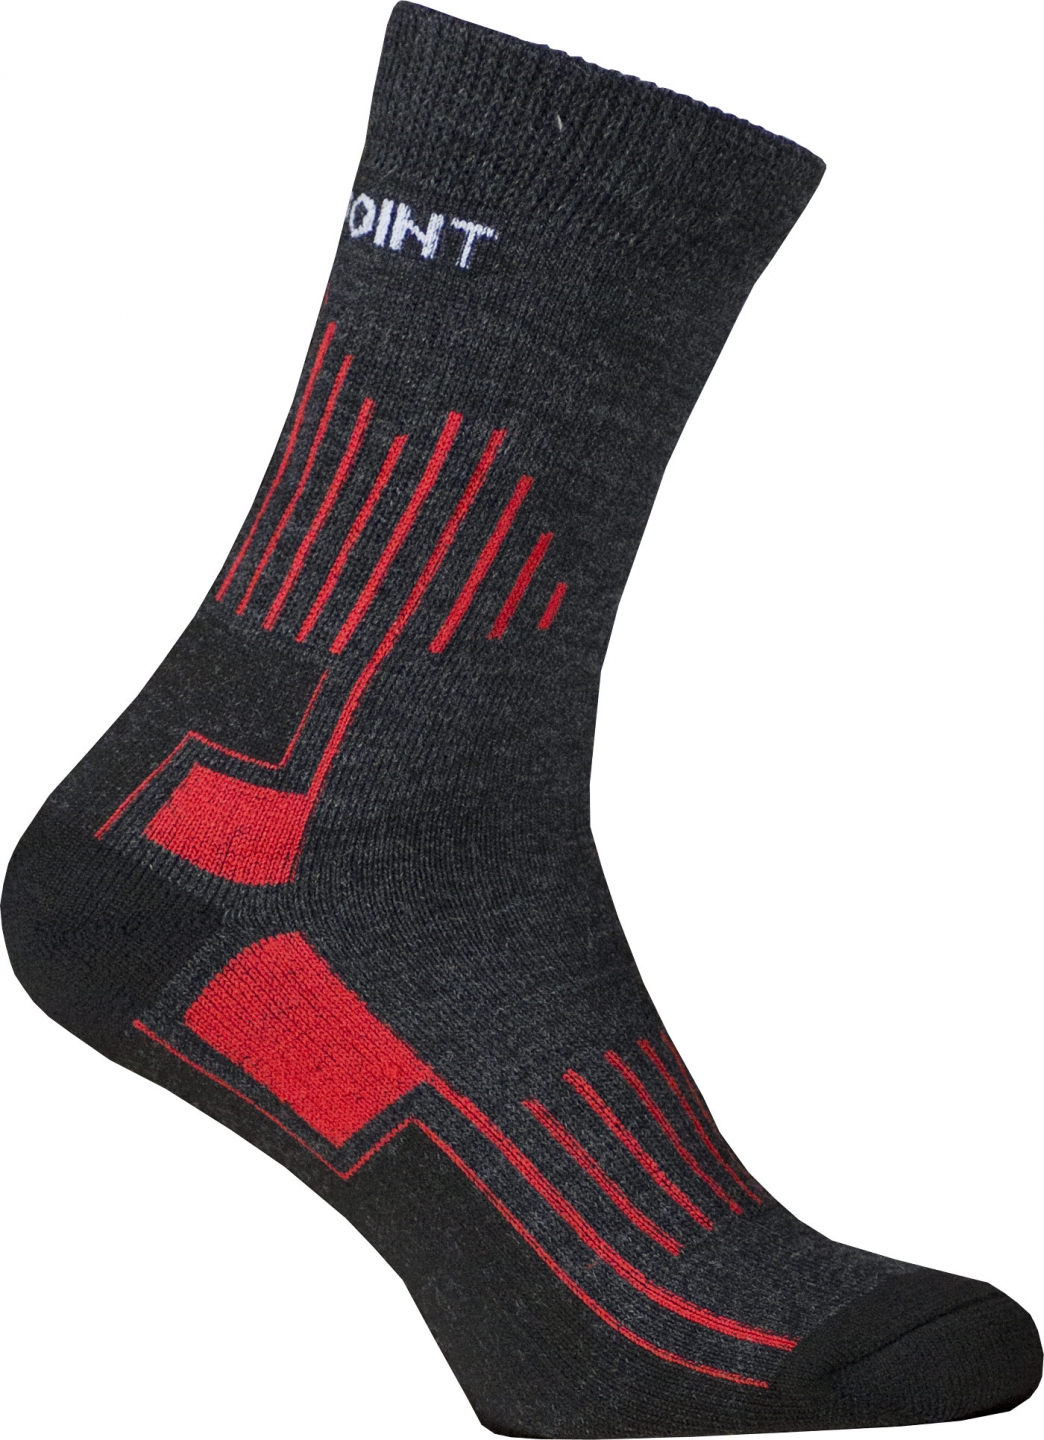 Ponožky High Point Lord 2.0 Merino Velikost: 43 - 47